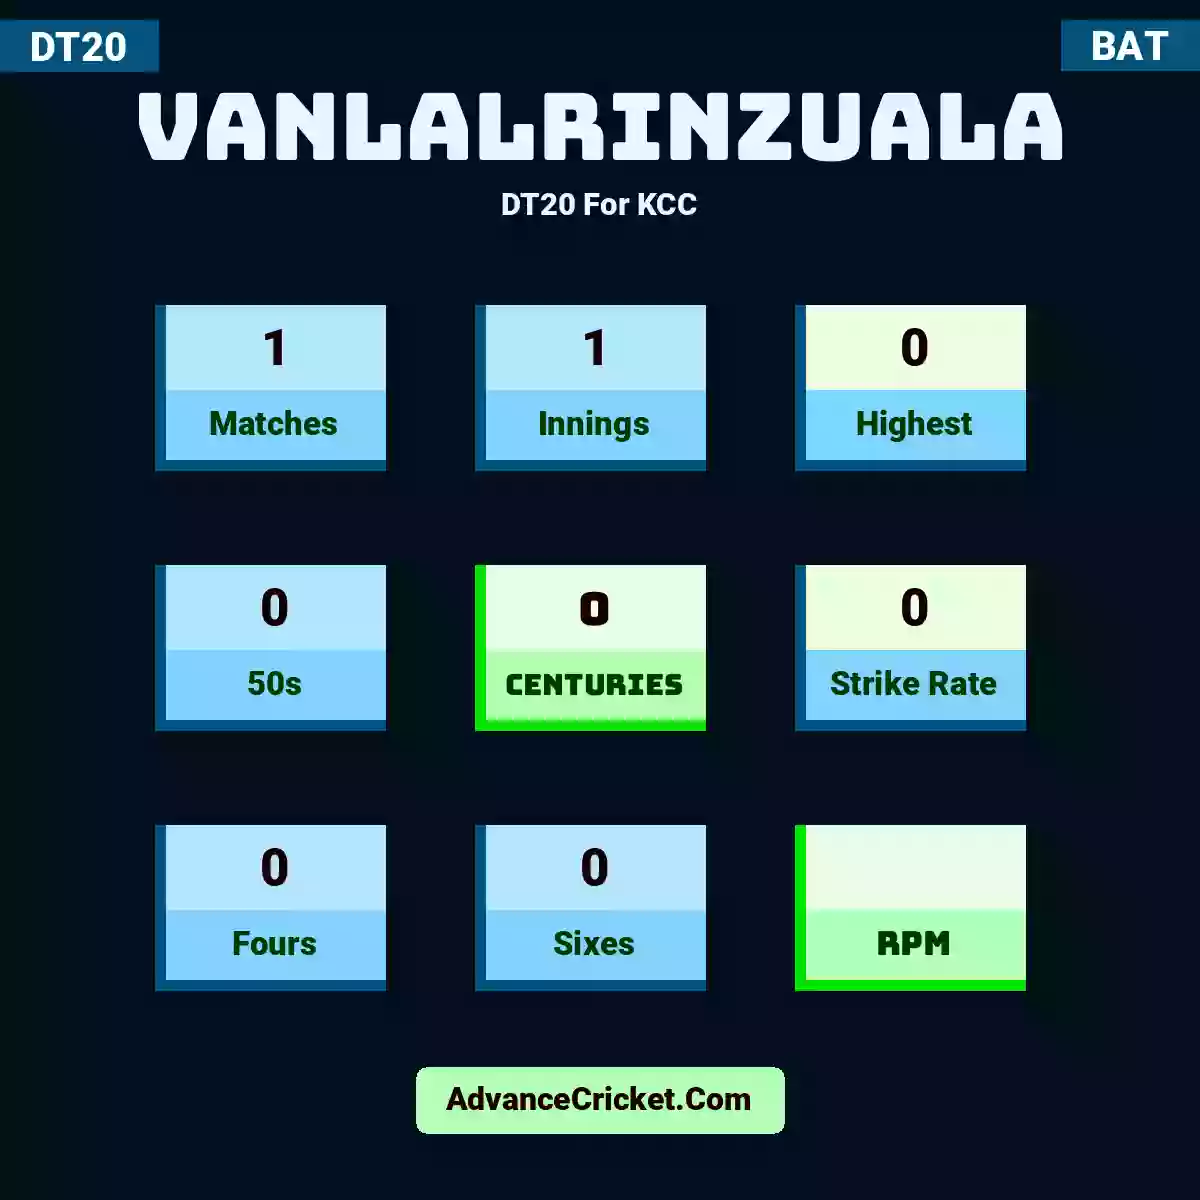 Vanlalrinzuala DT20  For KCC, Vanlalrinzuala played 1 matches, scored 0 runs as highest, 0 half-centuries, and 0 centuries, with a strike rate of 0. Vanlalrinzuala hit 0 fours and 0 sixes.